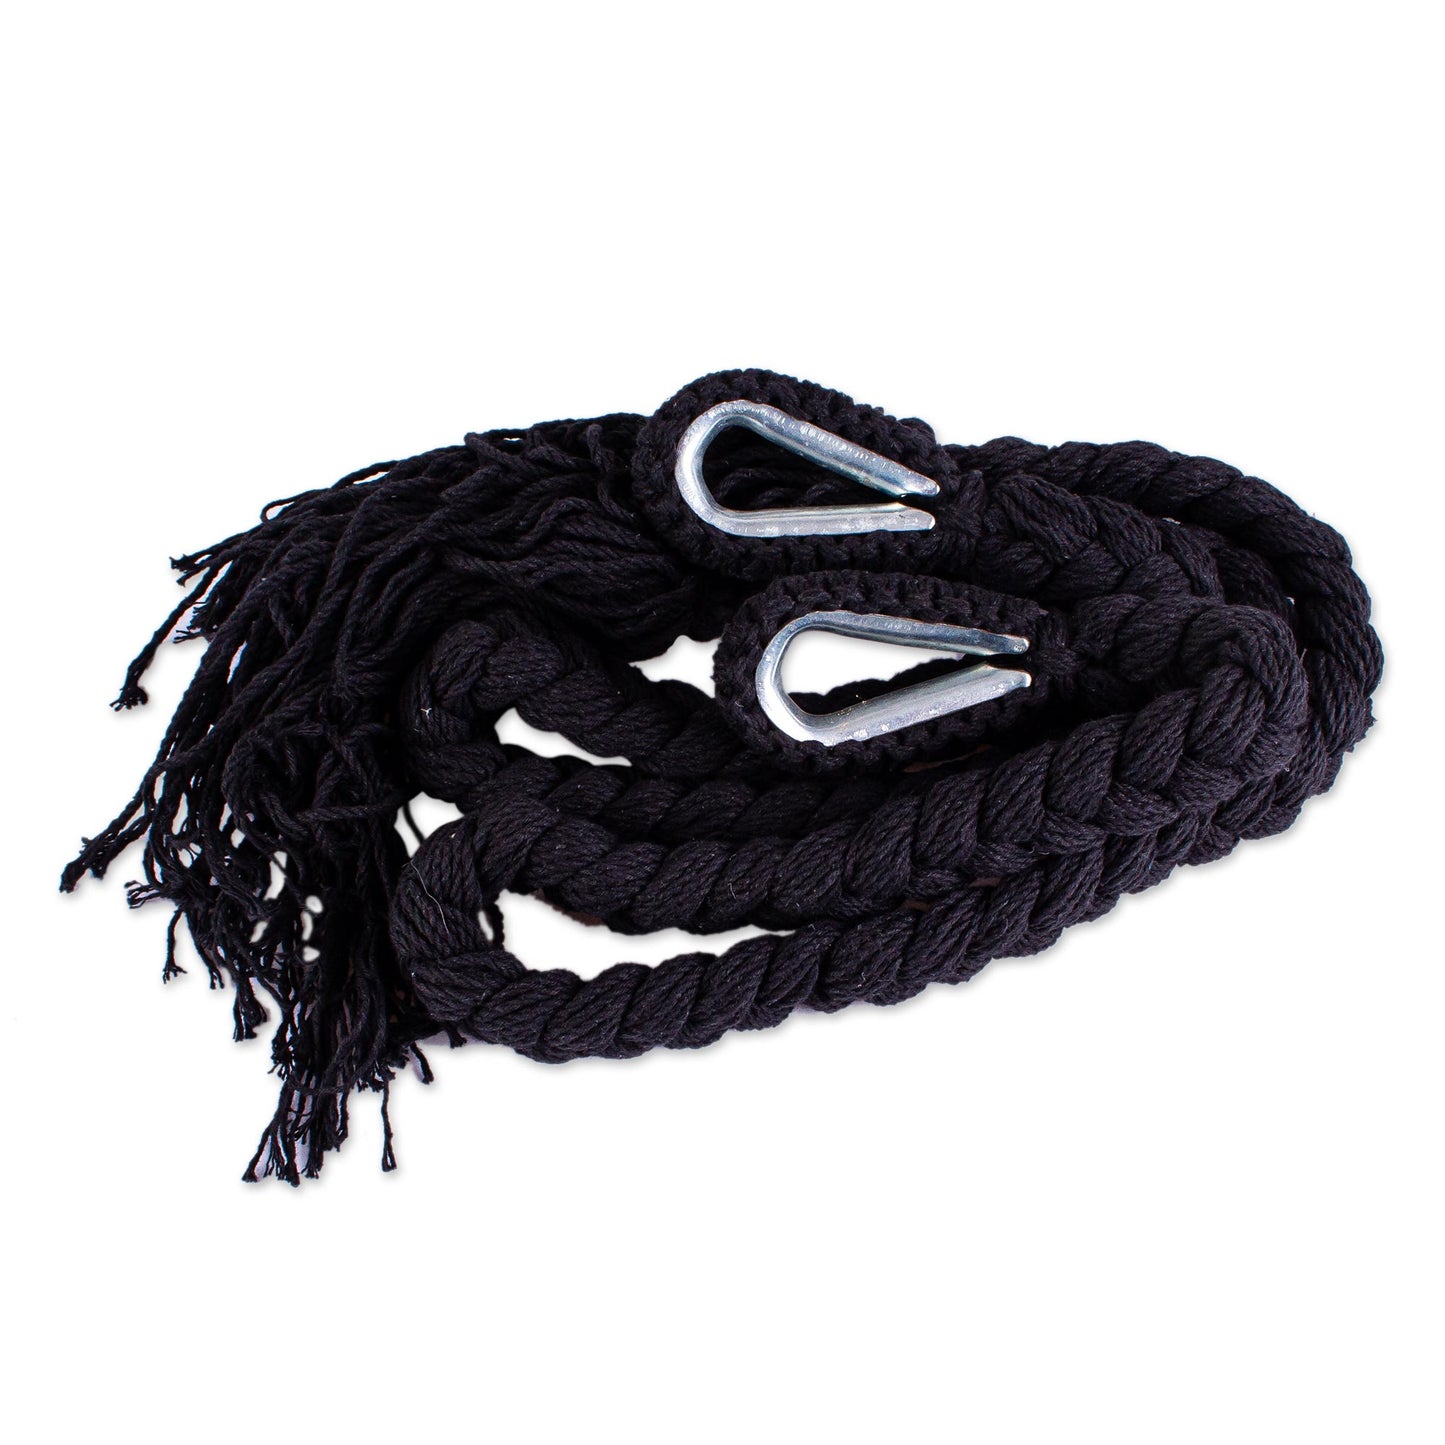 'Mirage in Black Black Cotton Rope Hammock (Triple)